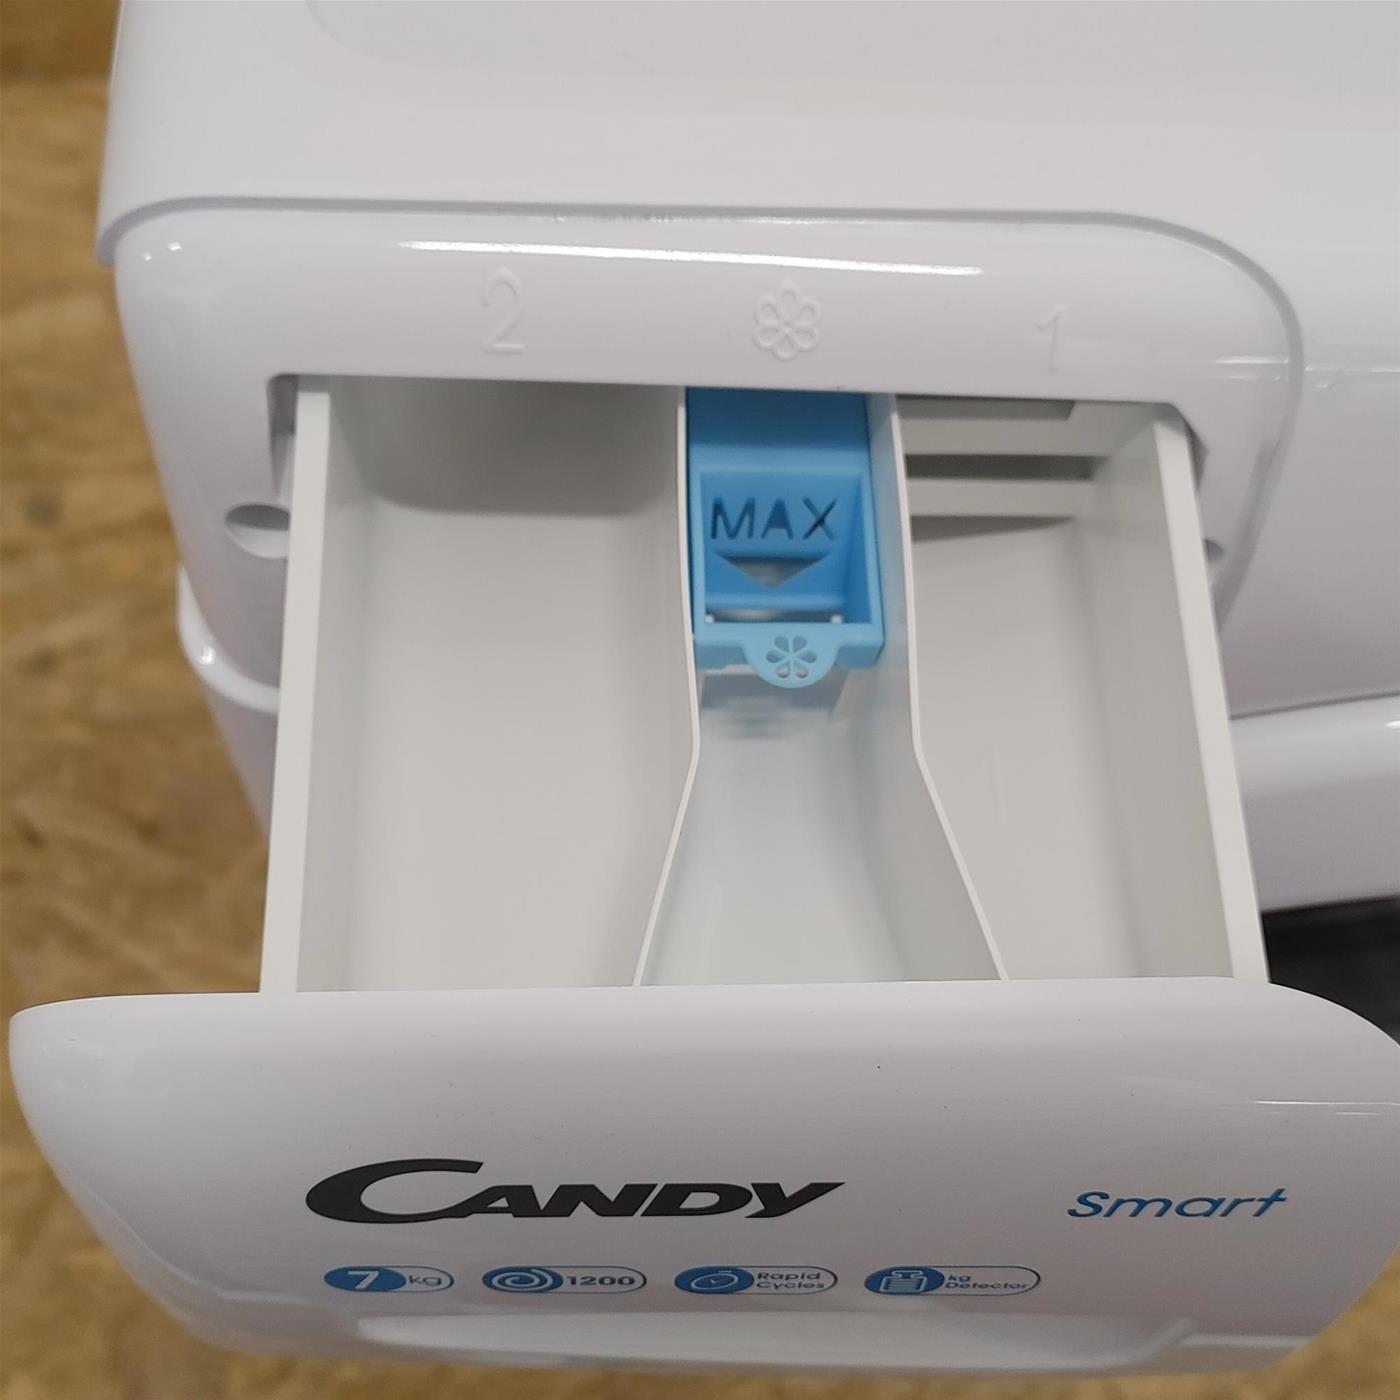 Candy CS 1272D3-S lavatrice Caricamento frontale 7 kg 1200 Giri/min Bianco